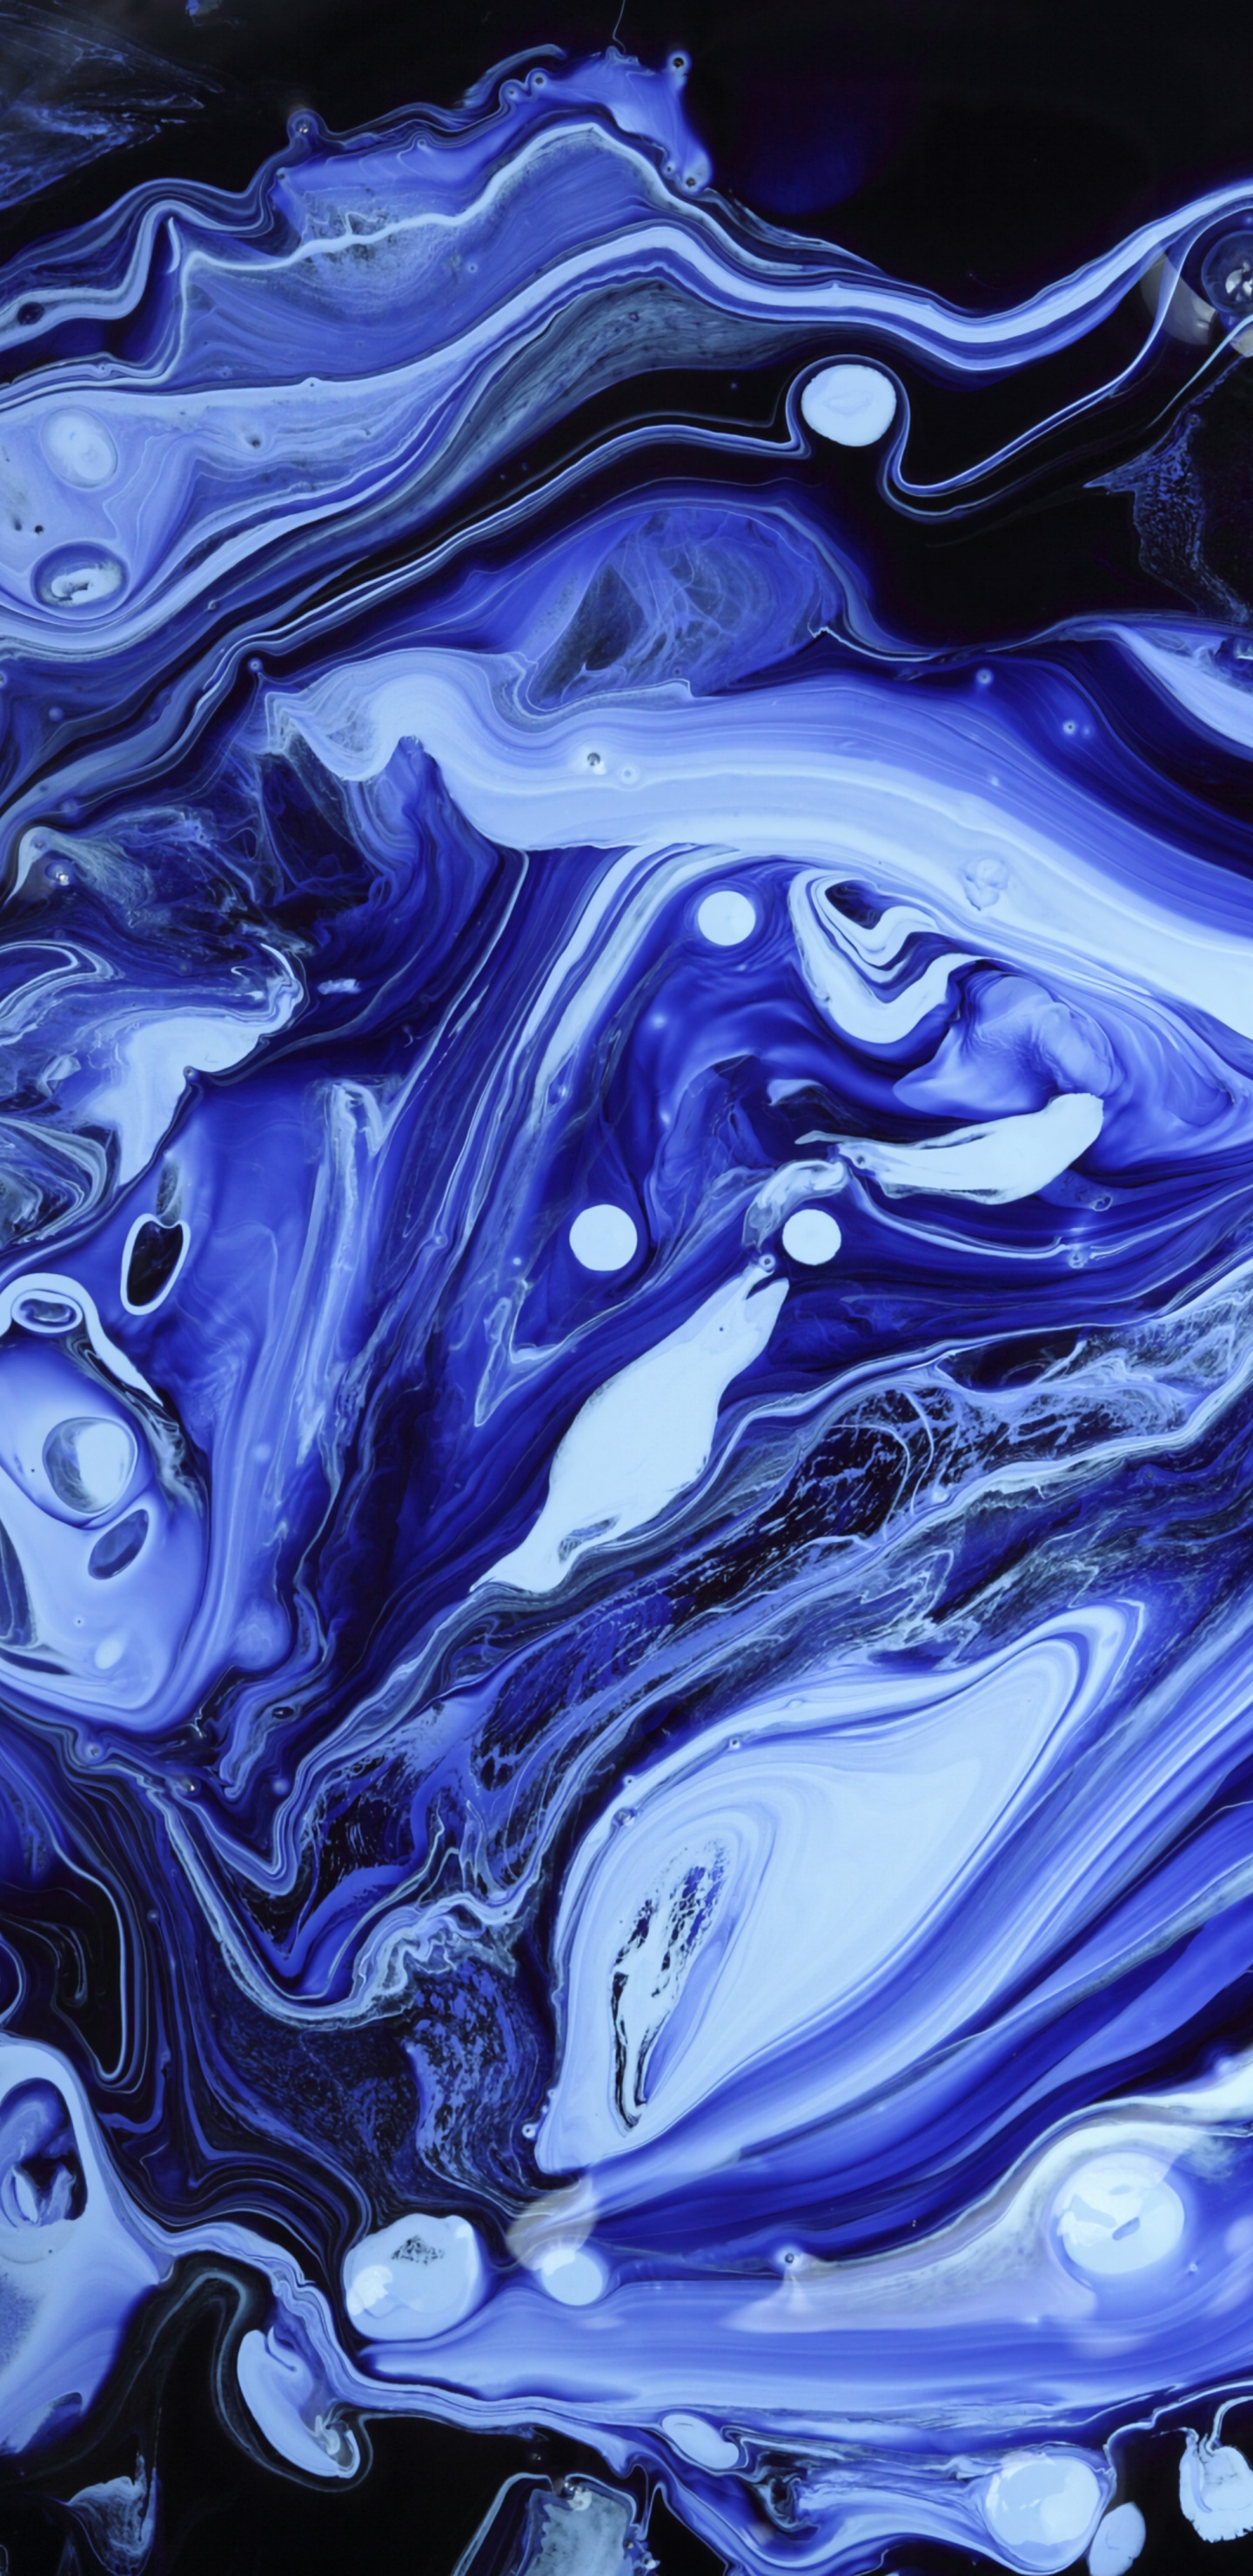 Water Drops on Blue Water. Wallpaper in 1440x2960 Resolution